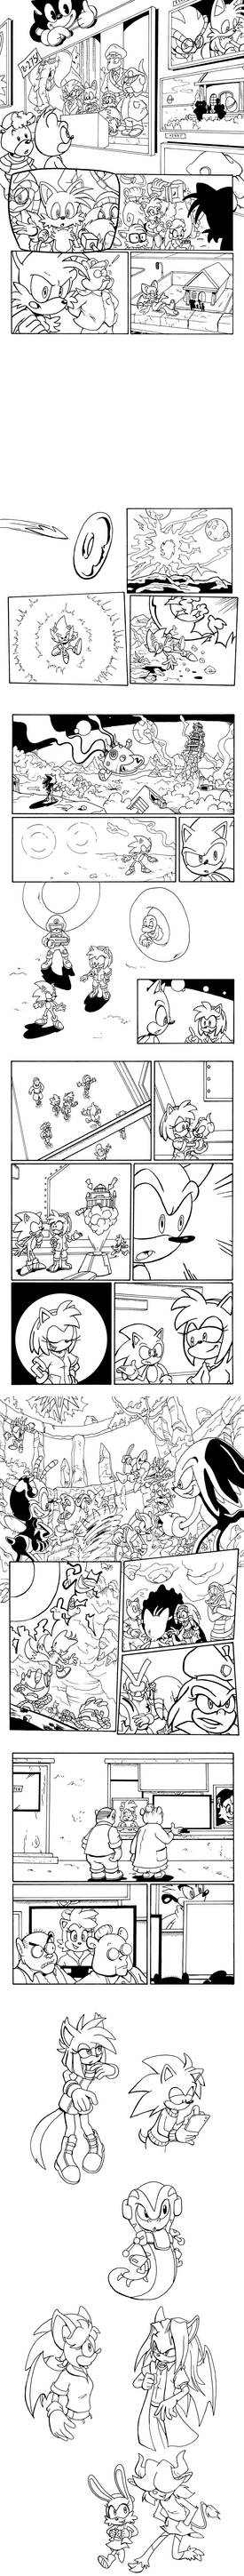 Sonic the Comic Online 275